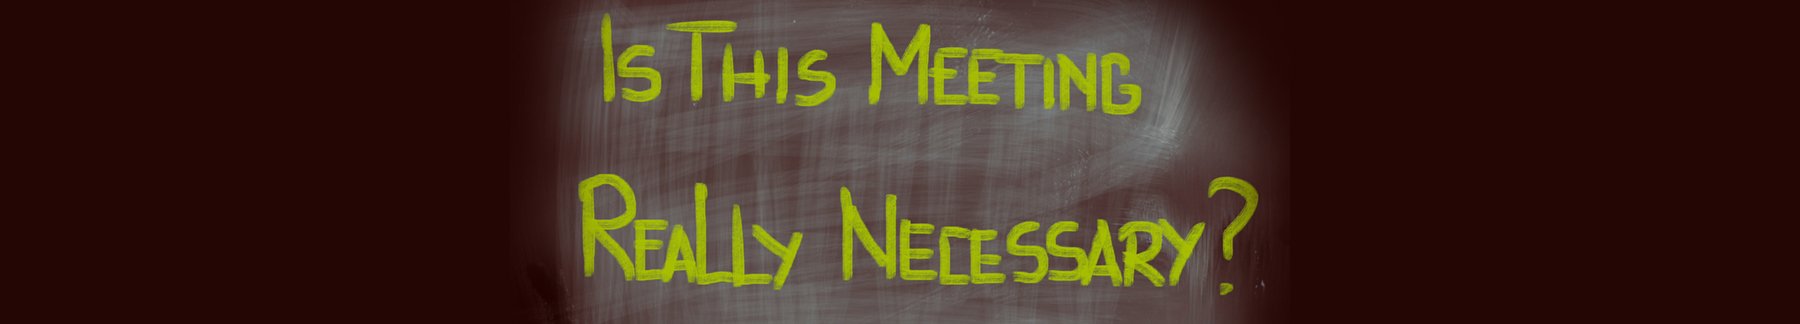 Meetings Management